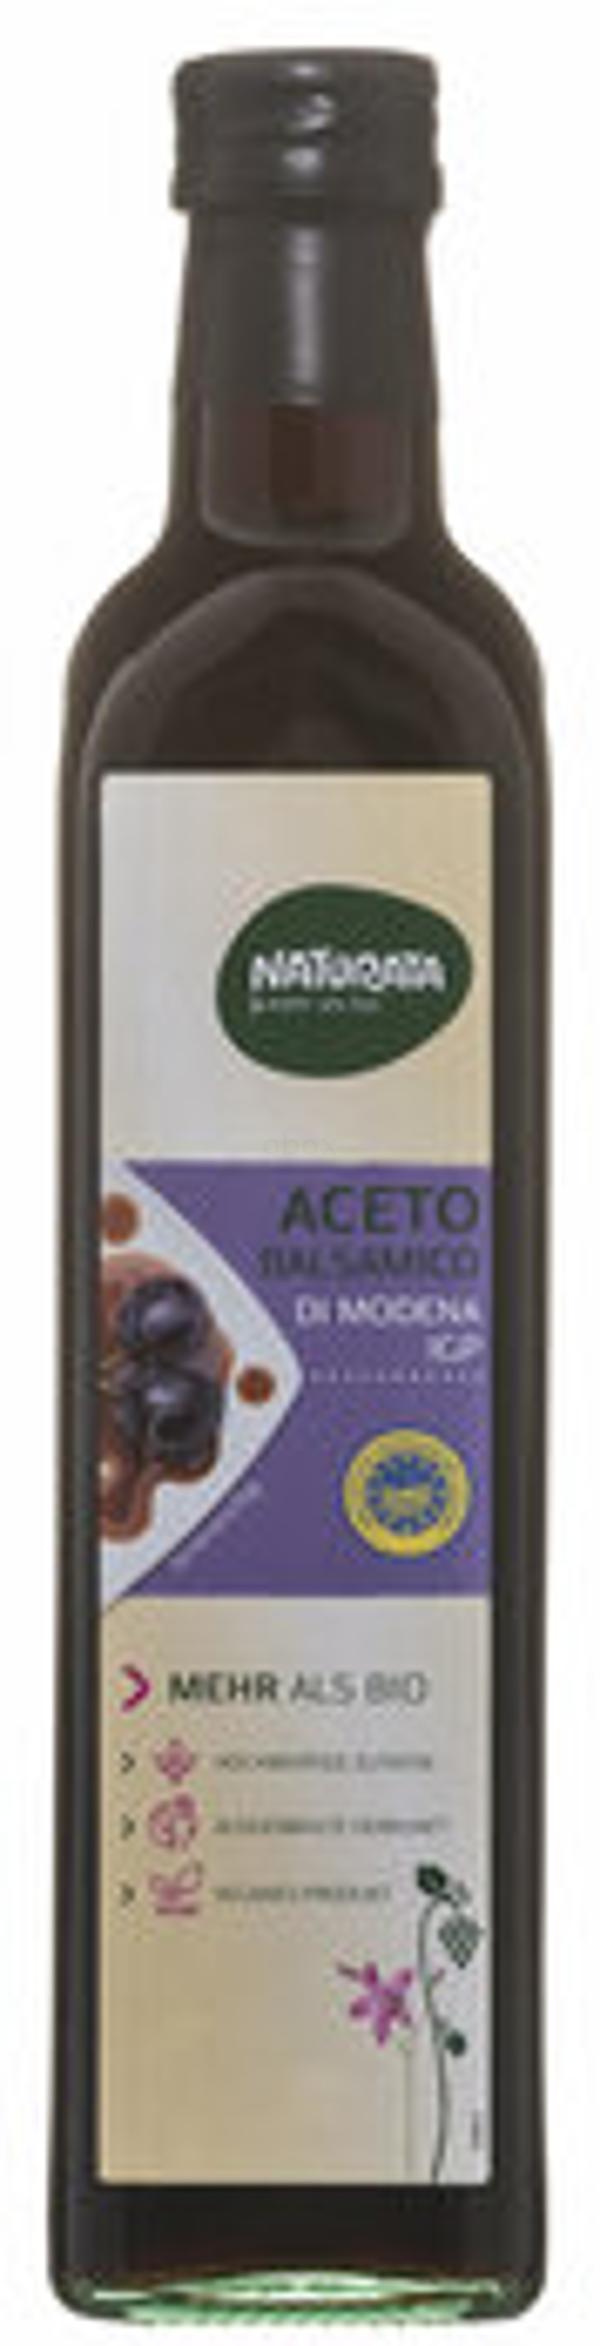 Produktfoto zu Aceto Balsamico di Modena IGP